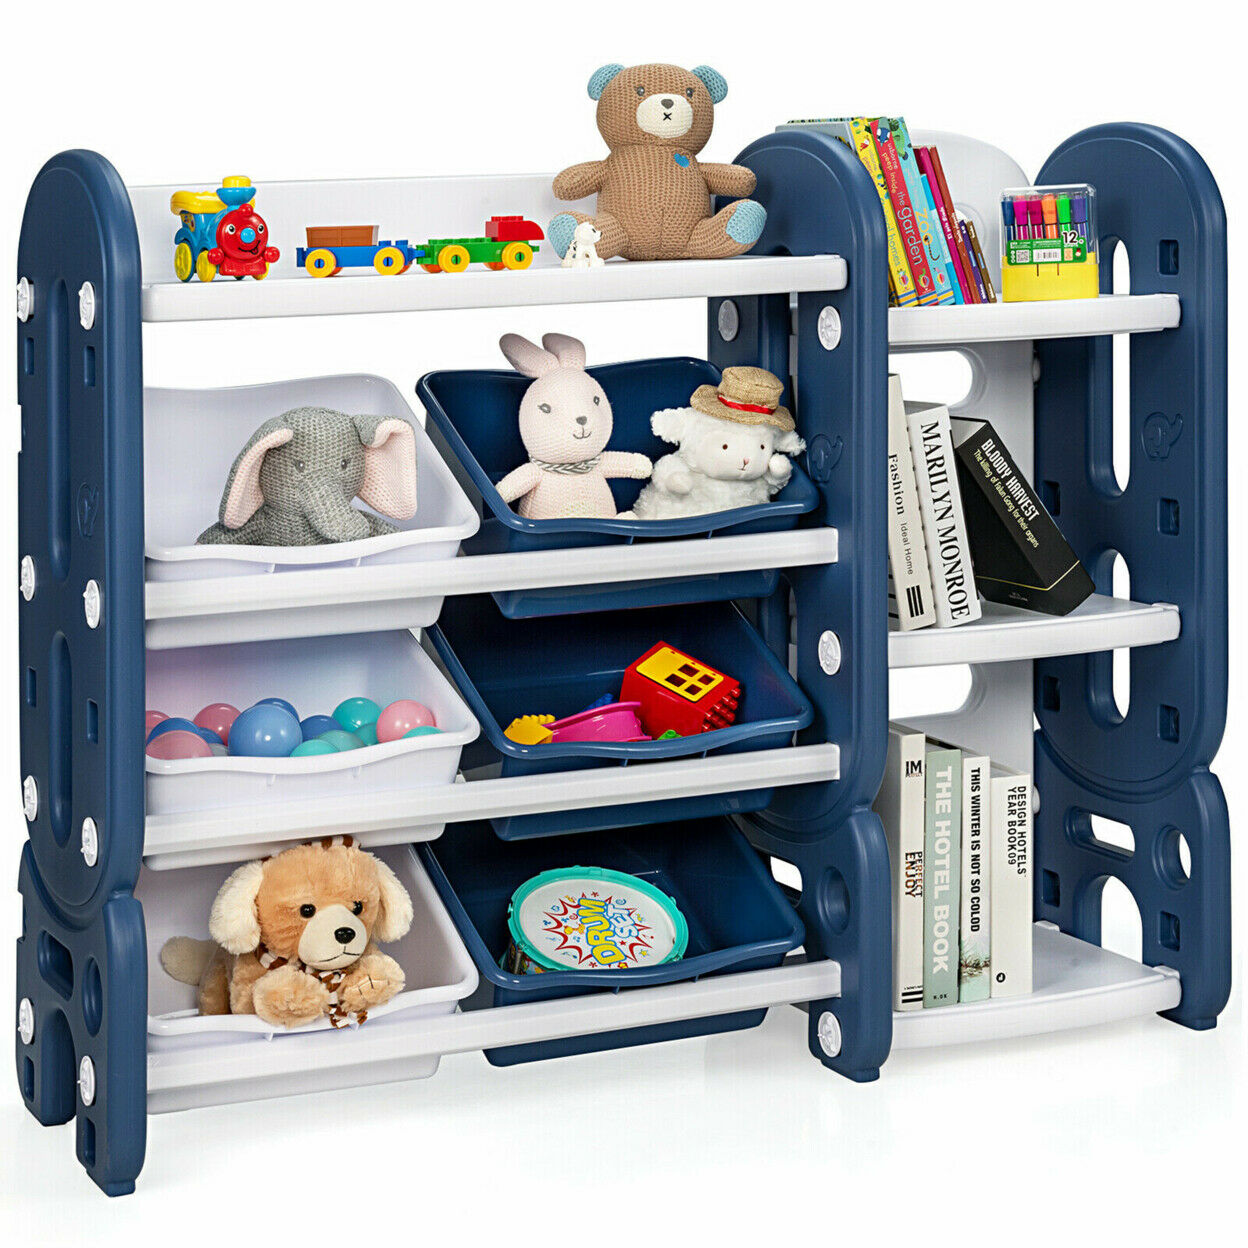 Gymax Kids Toy Storage Organizer W/bins & Multi-layer Shelf For Bedroom Playroom